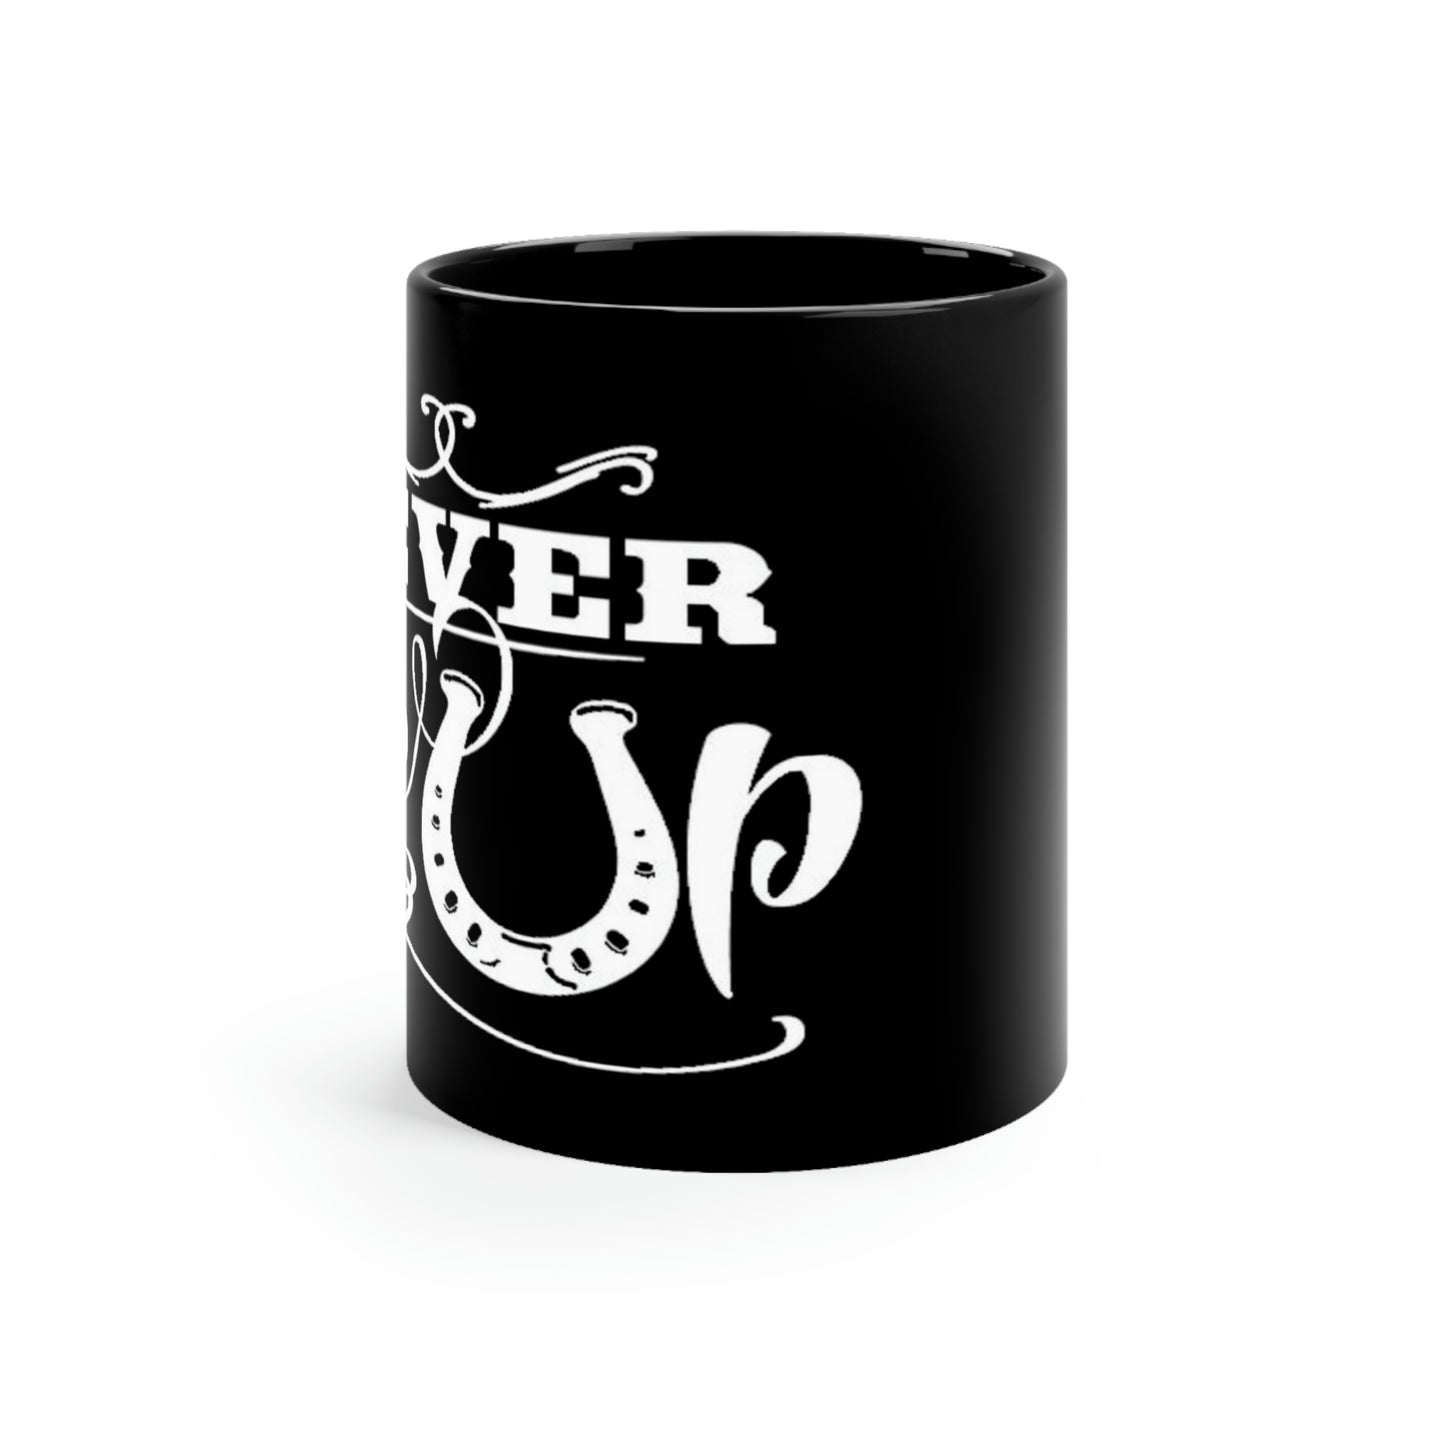 Never Give Up - Black mug 11oz